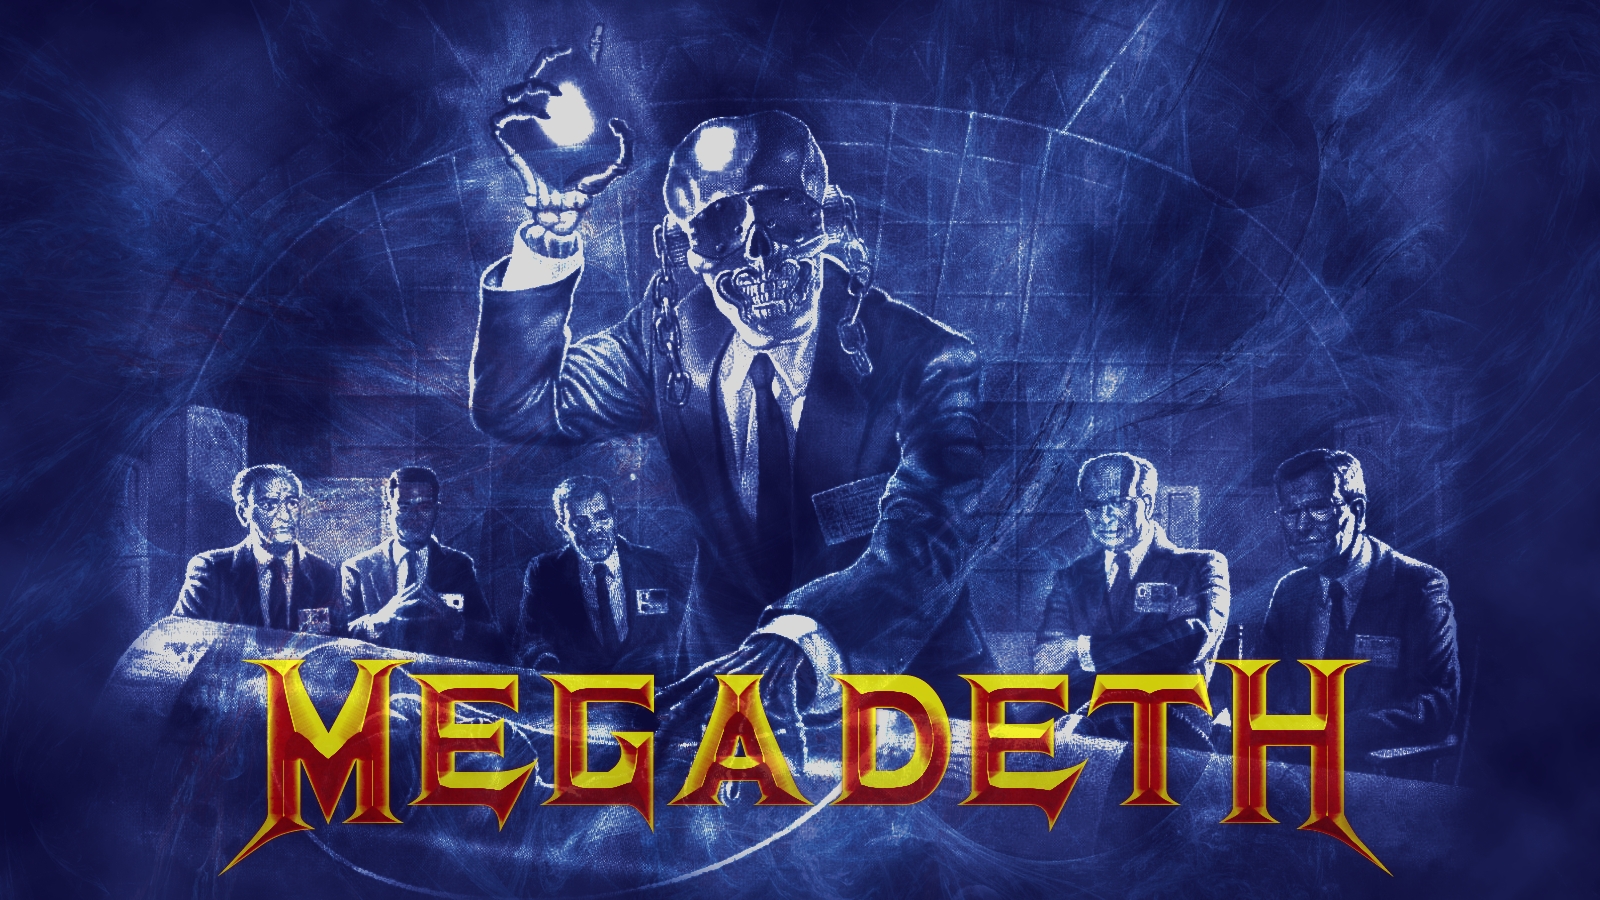 Fondos De Megadeth Para Whatsapp En HD Im Genes Wallpappers